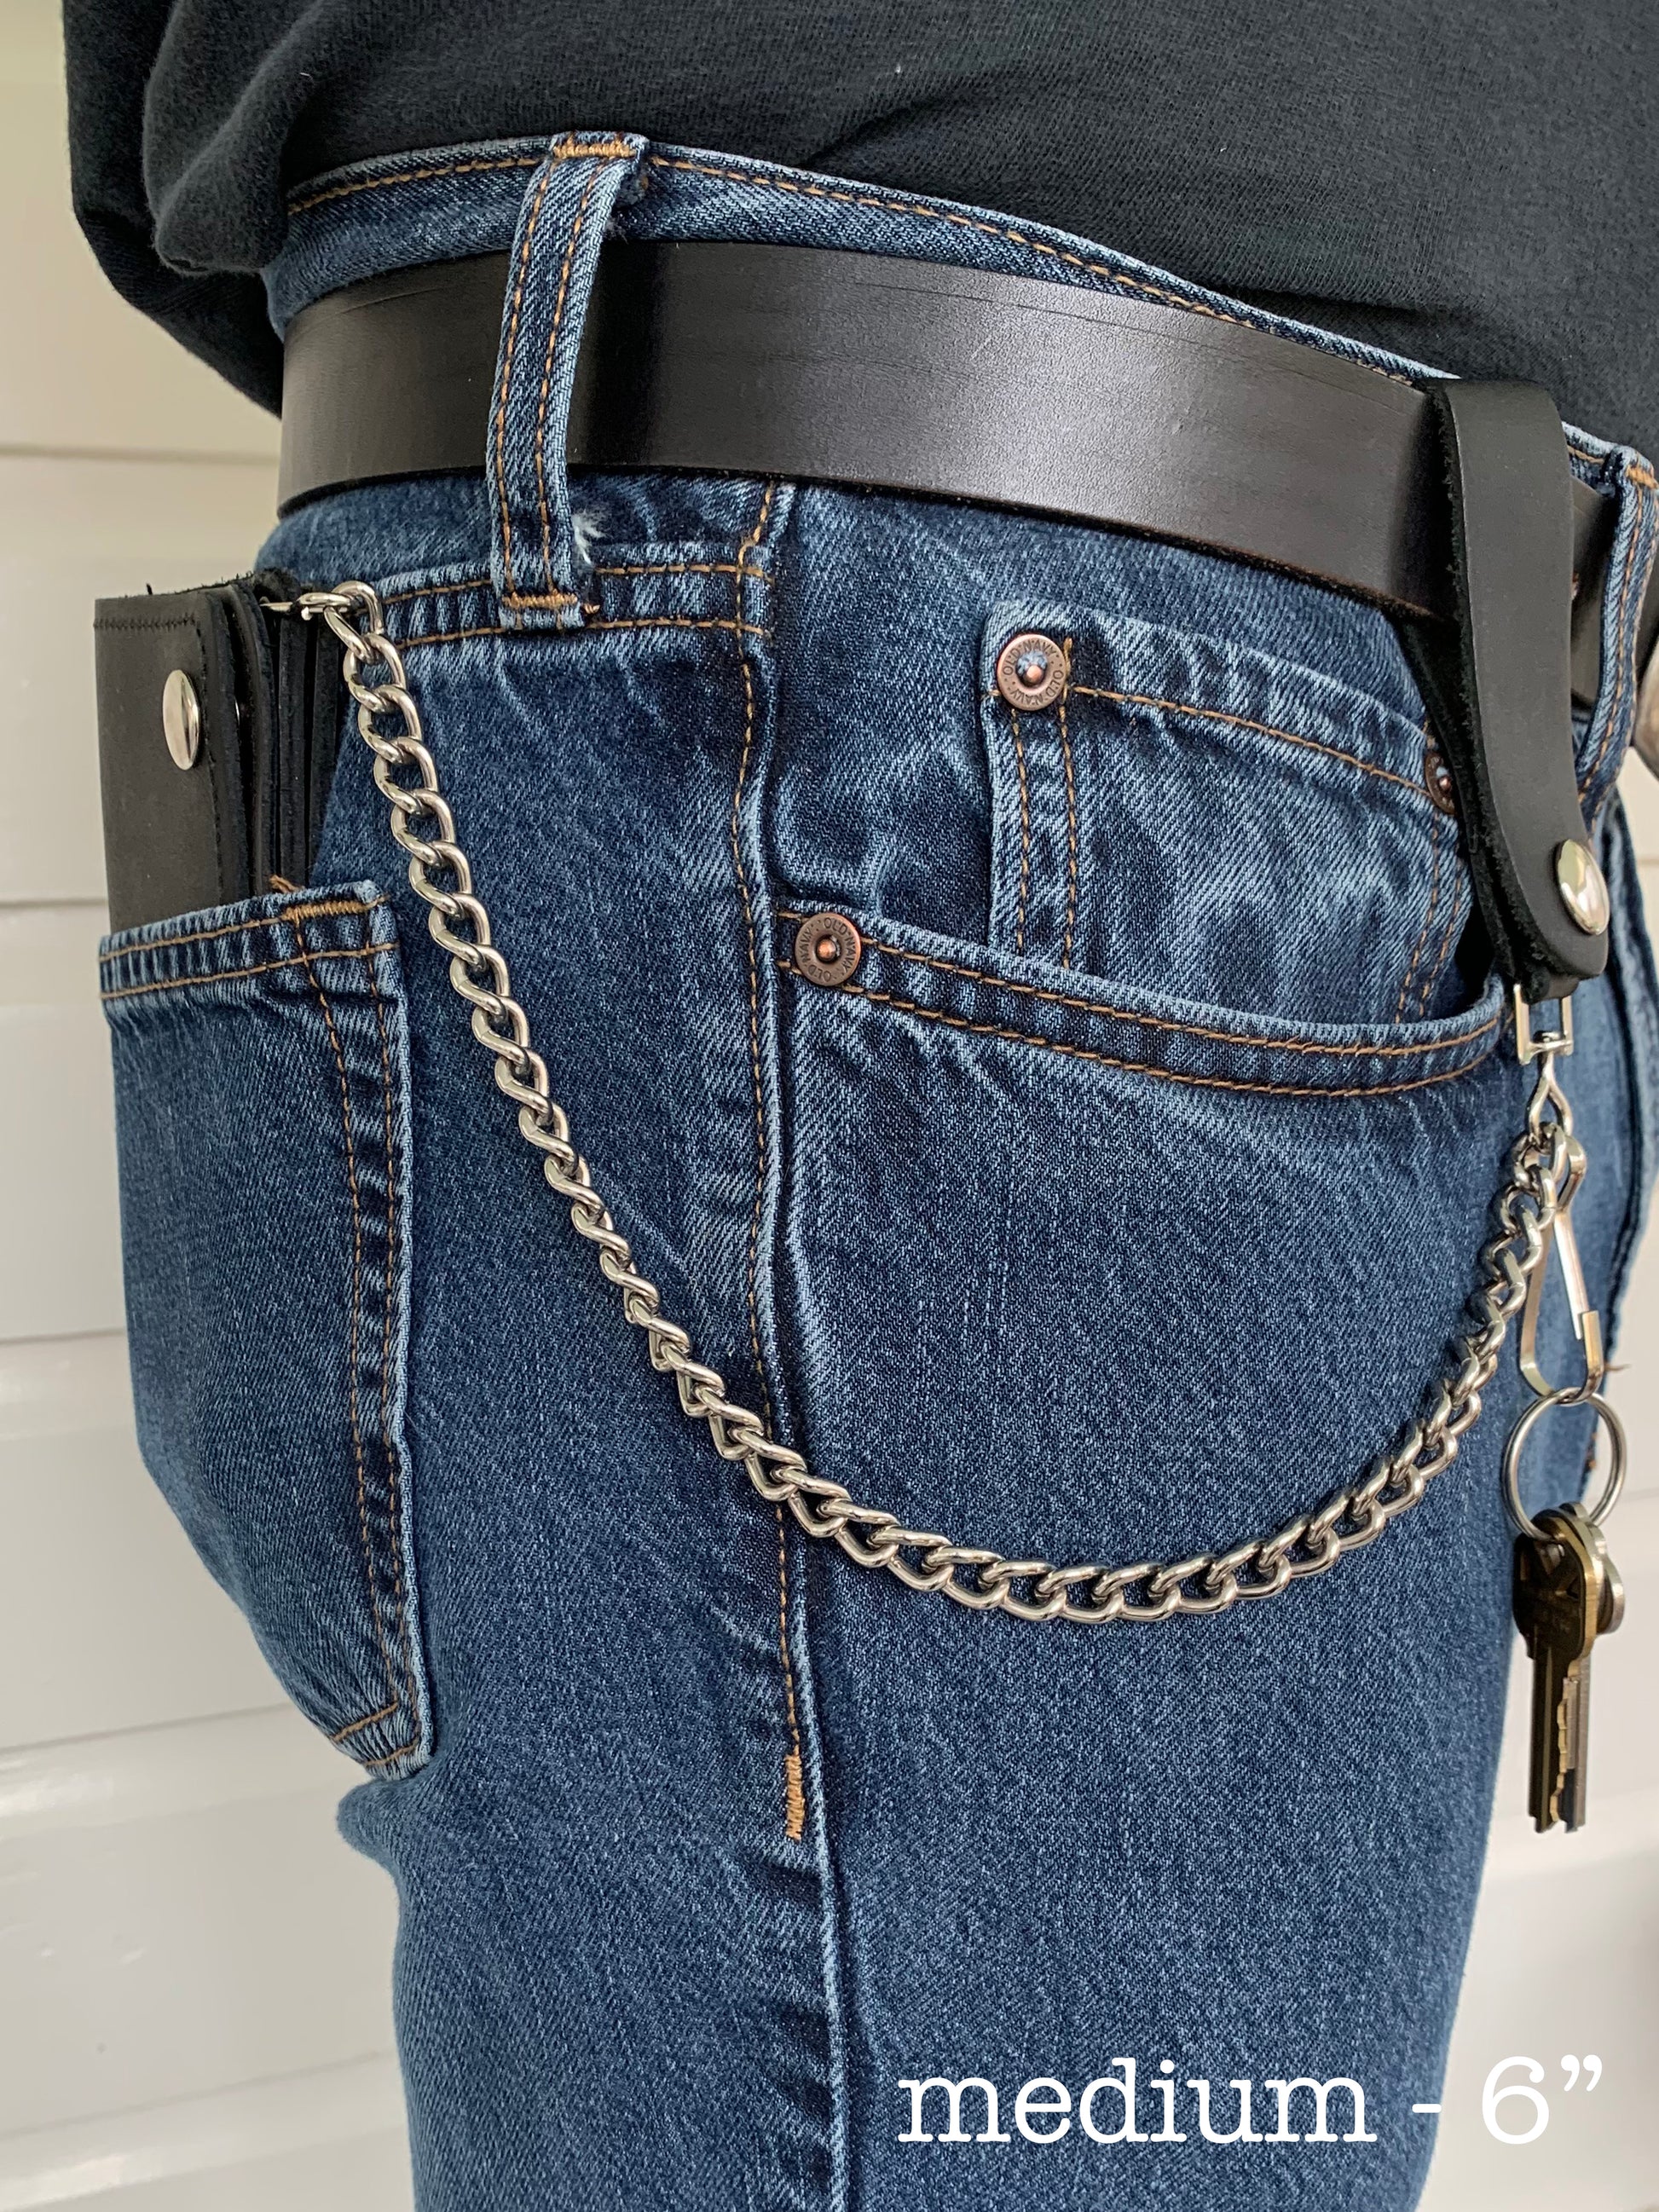 Real Leather Mens Biker Card/Money Long Wallet Purse W/Jeans Key Chain